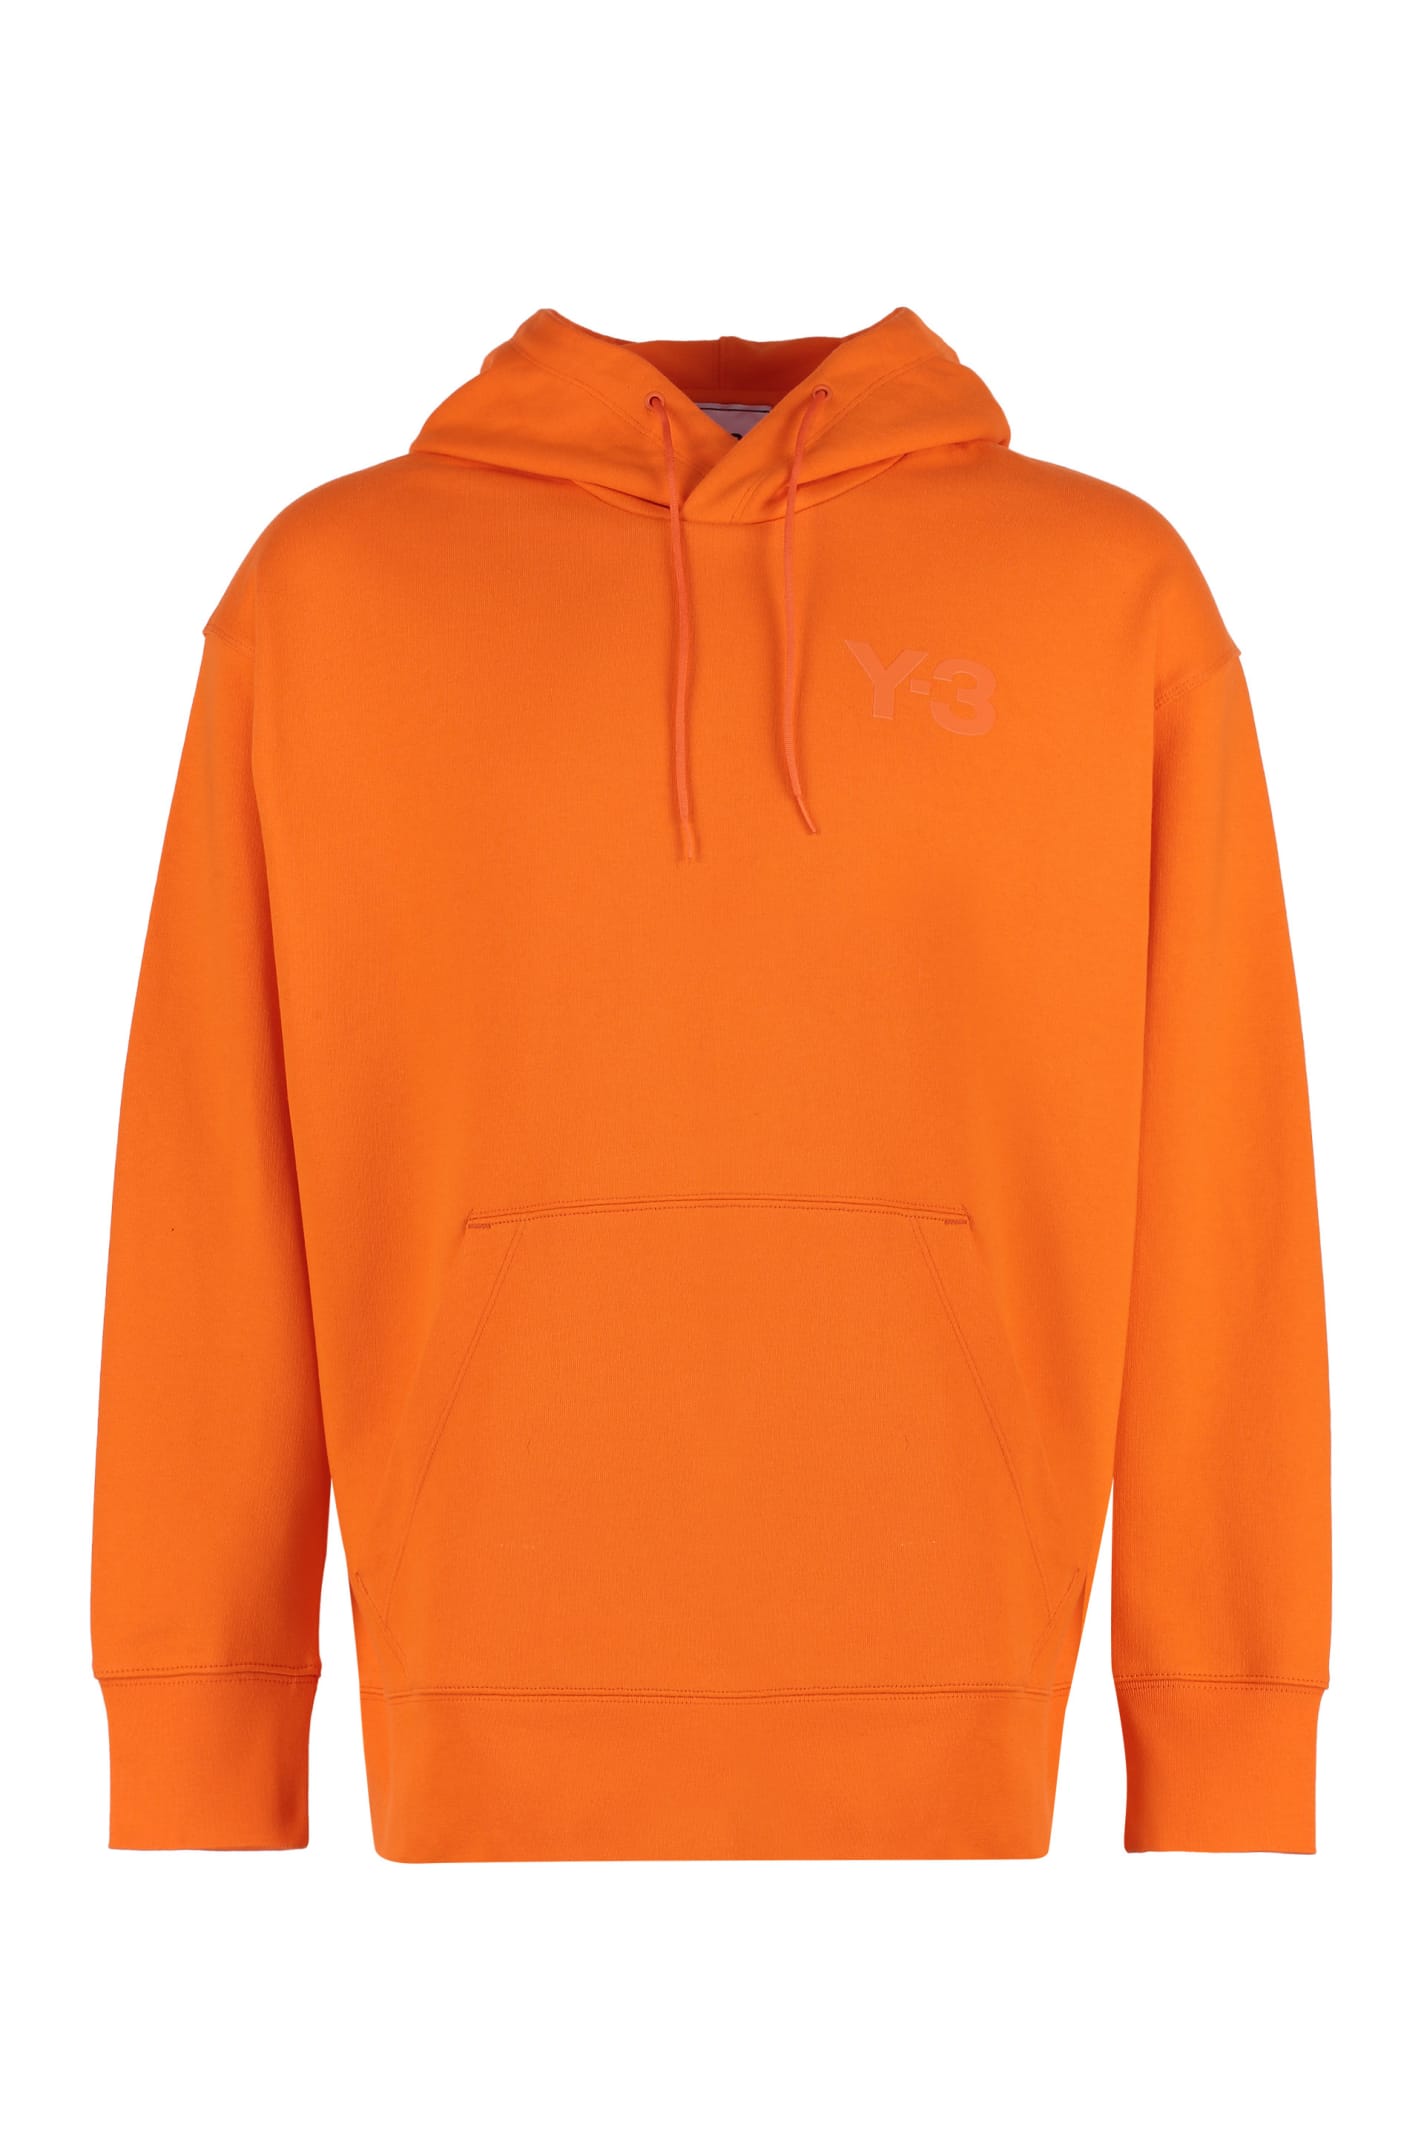 Y-3 Hooded Sweatshirt